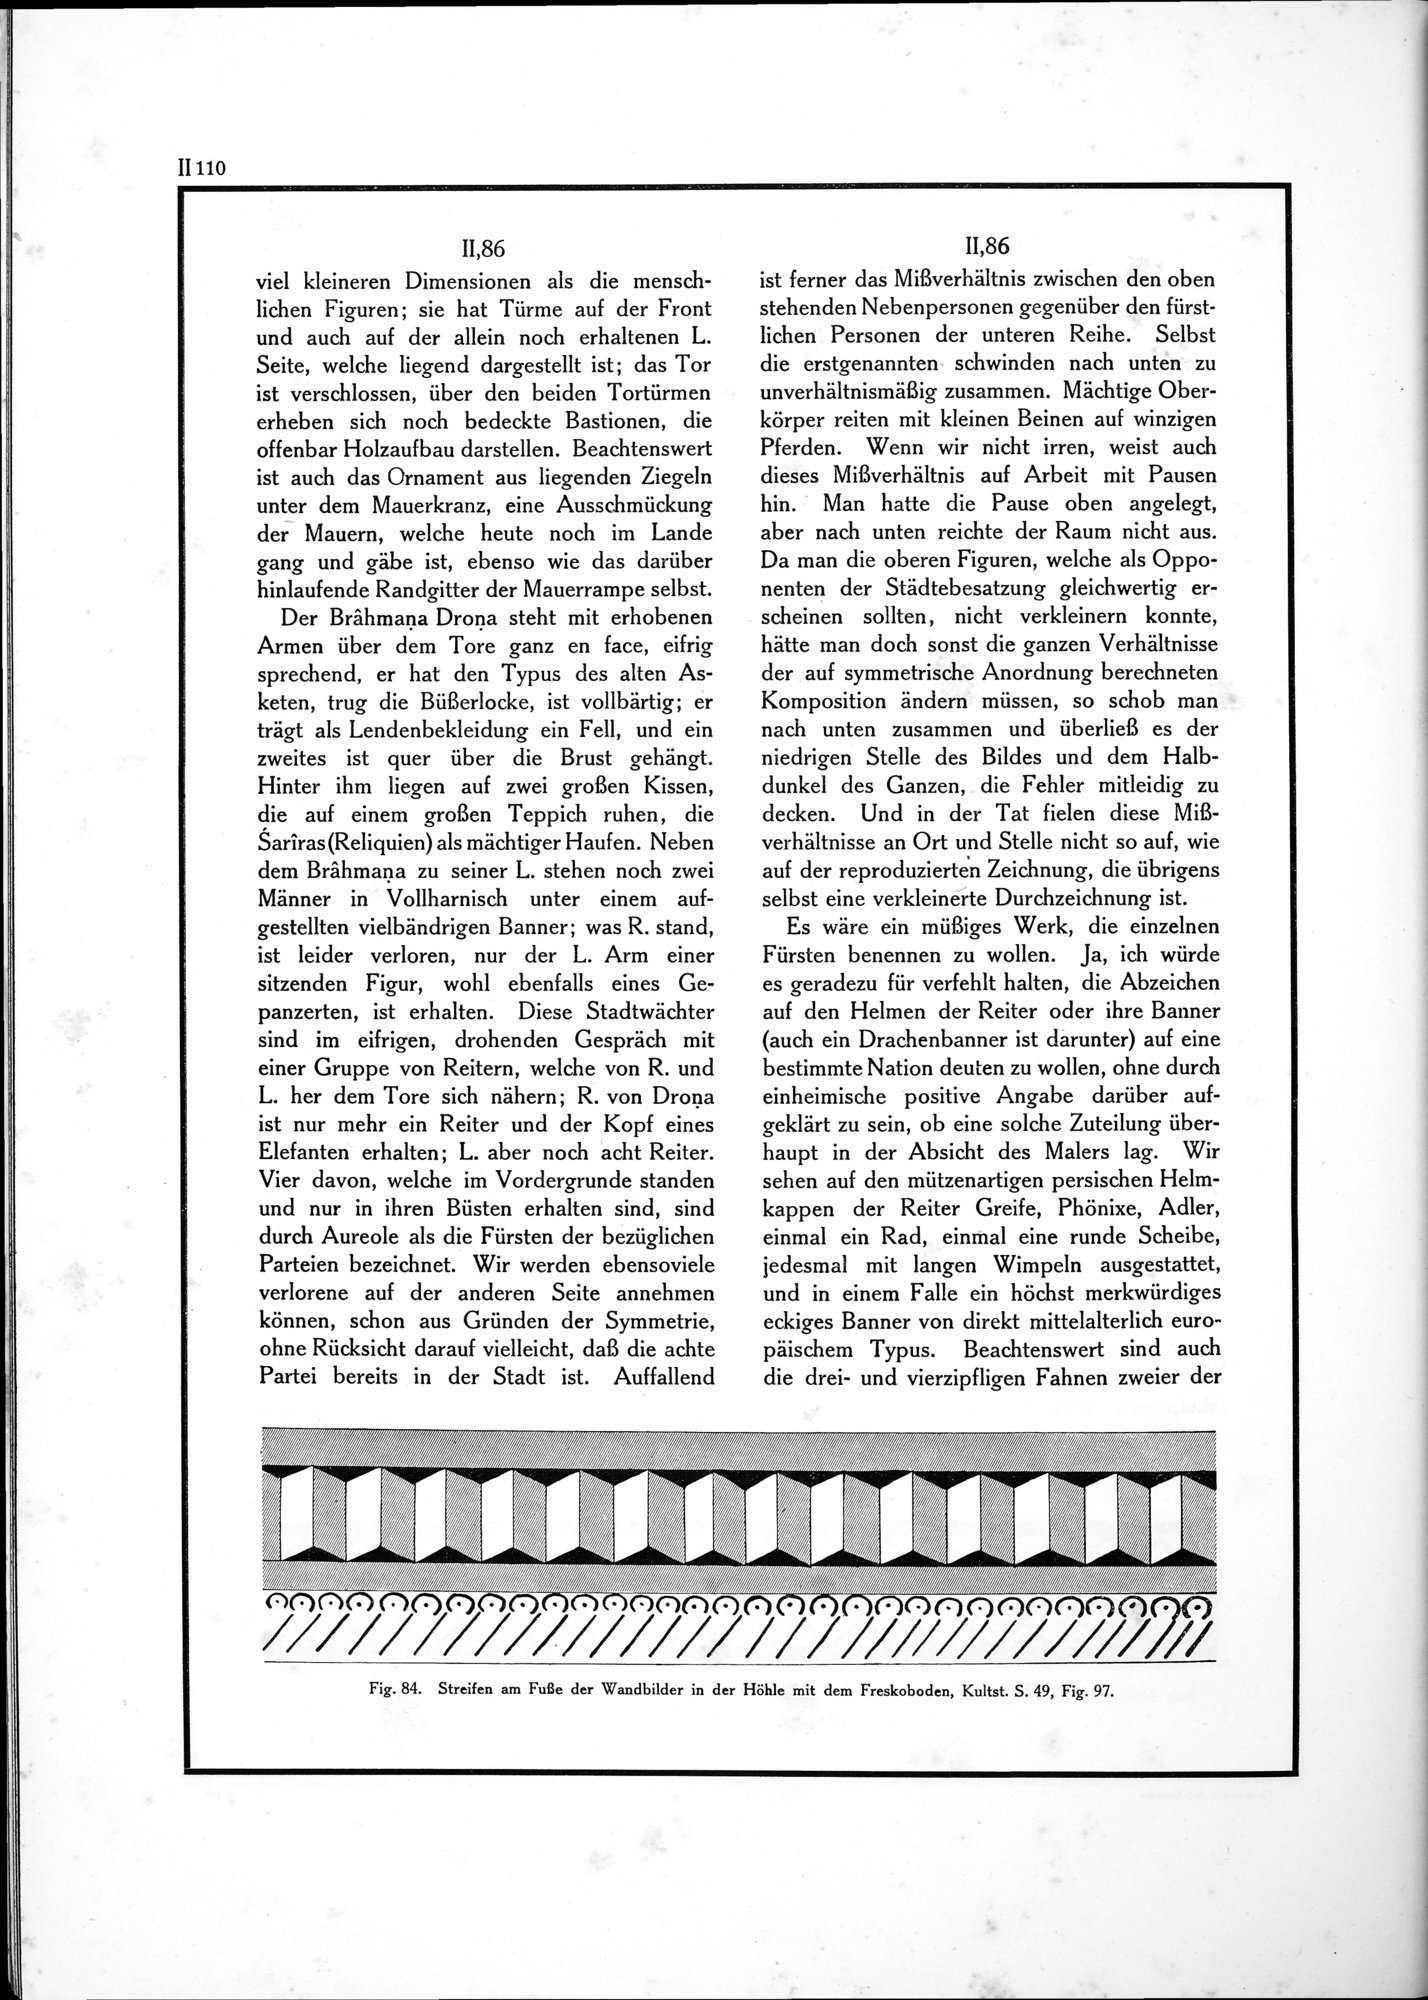 Alt-Kutscha : vol.1 / Page 232 (Grayscale High Resolution Image)